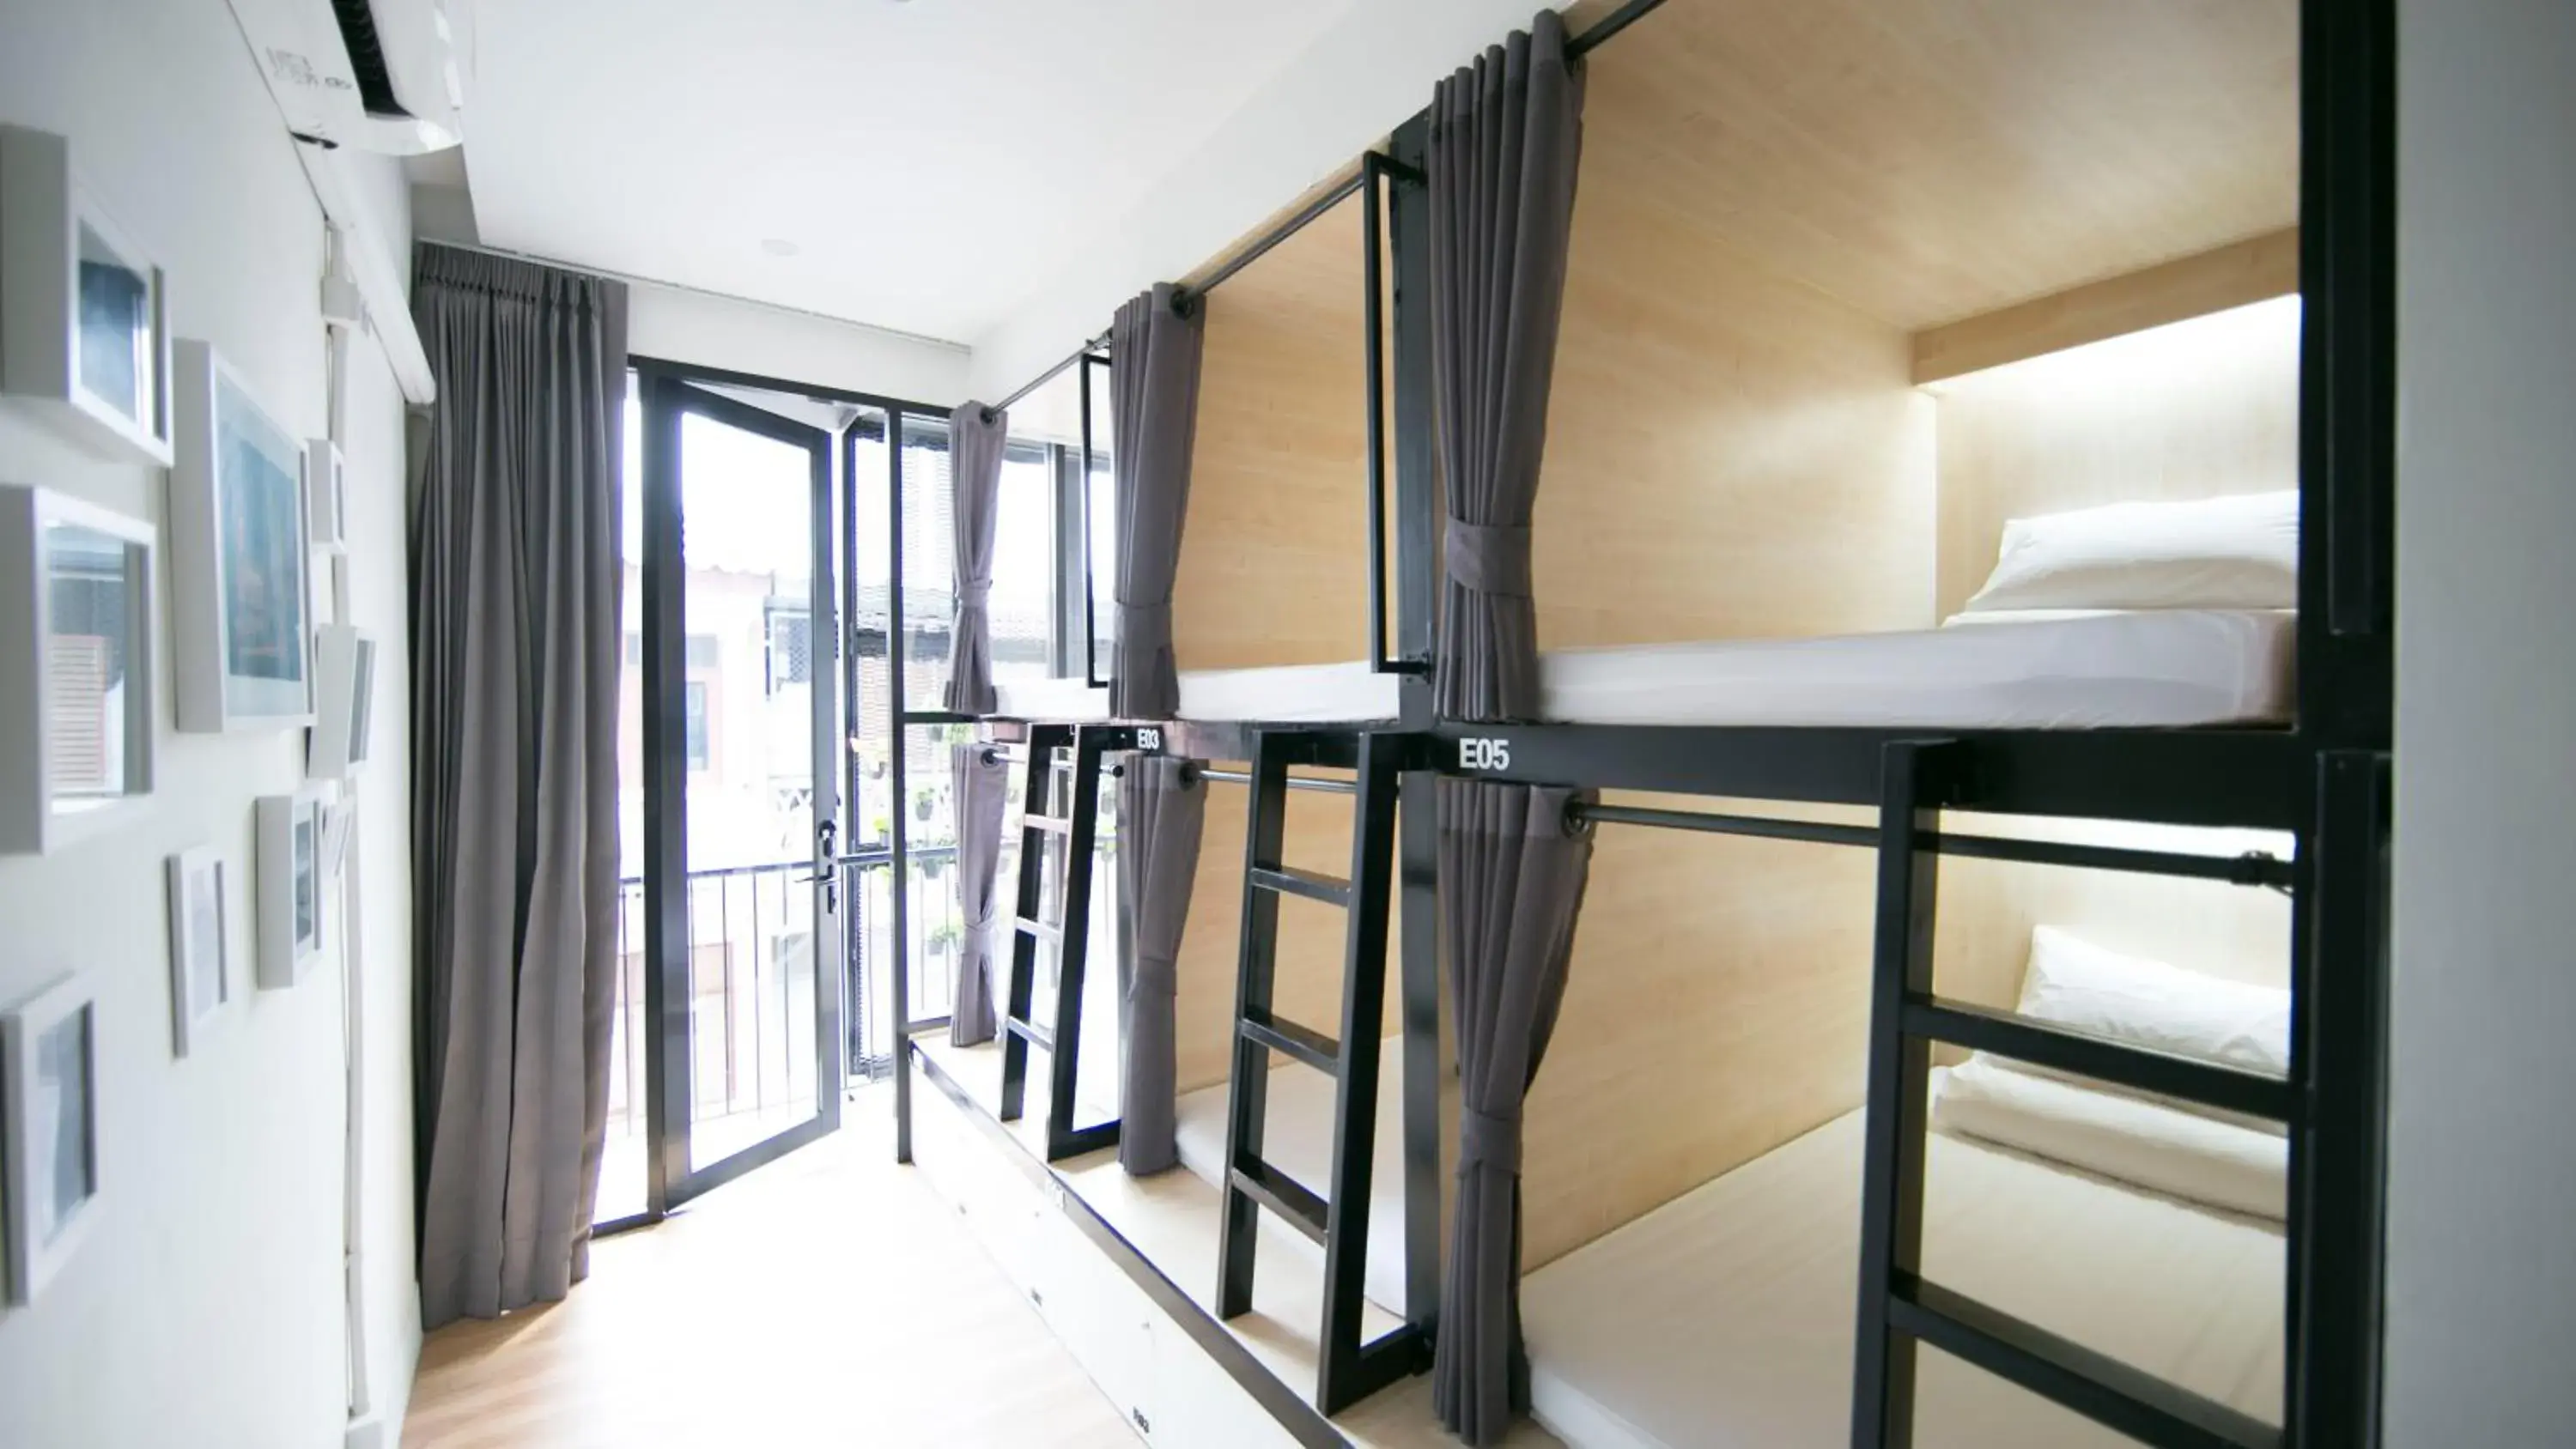 Bed in 8-Bed Female Dormitory Room in Lamurr Sukhumvit 41 Hostel